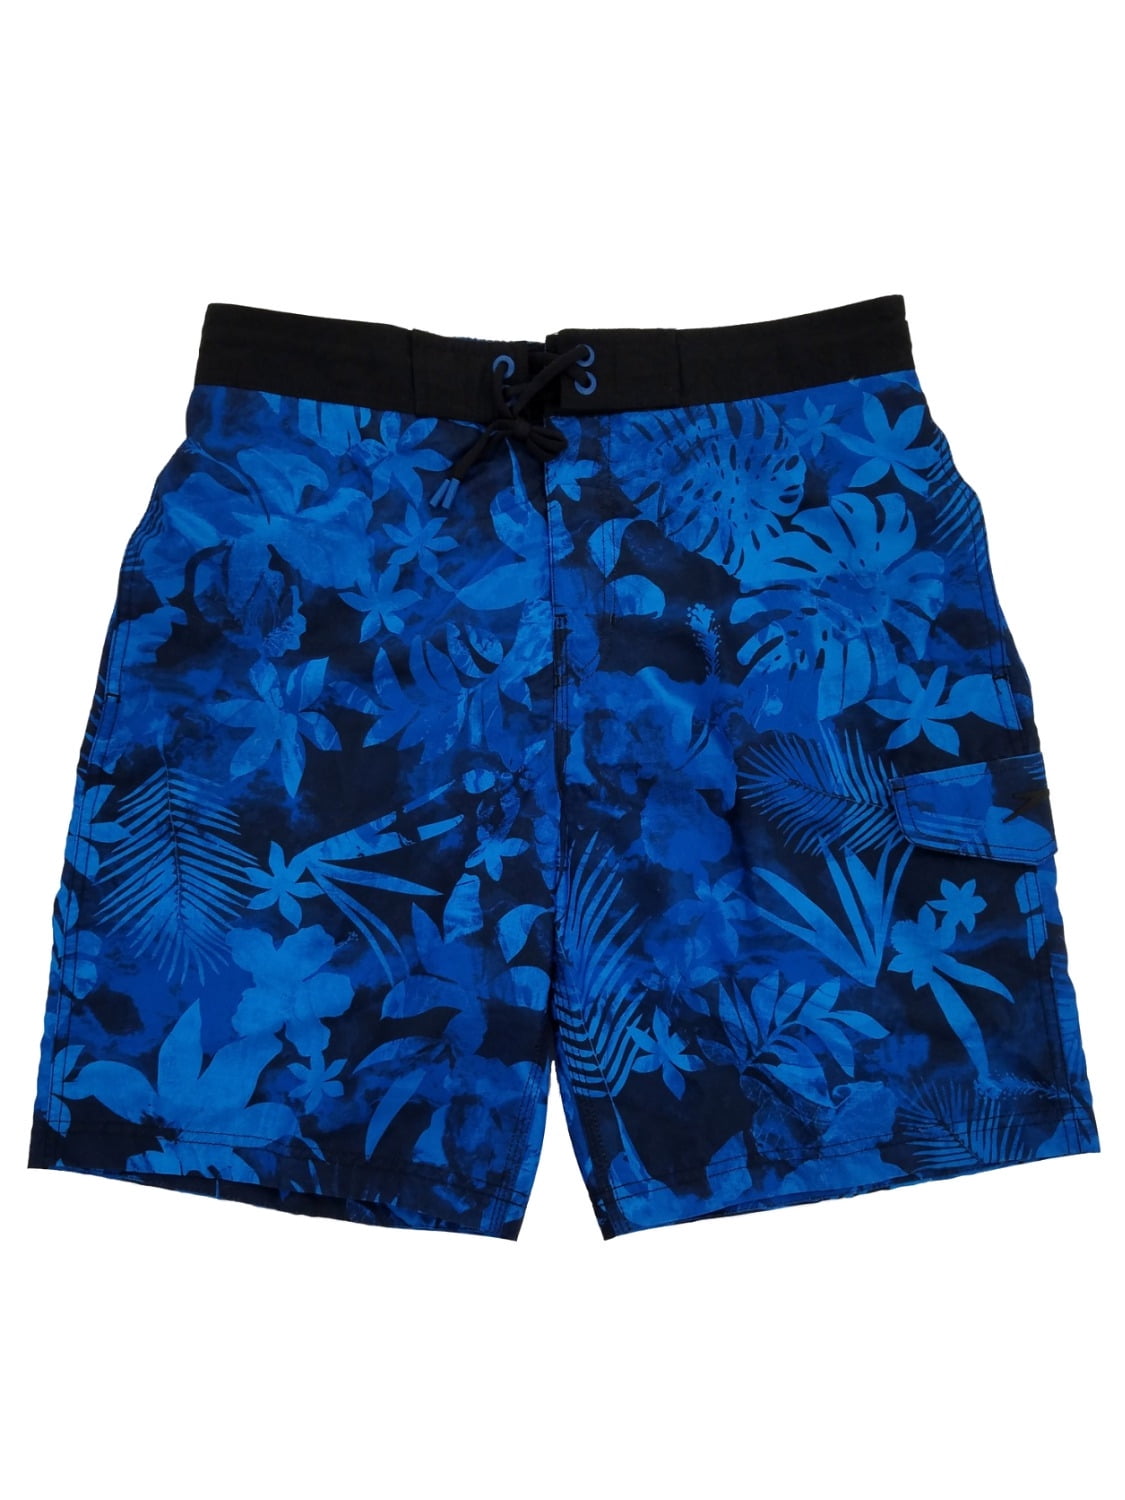 Blue Men's Floral Beach Vacation Swim Trunk Pocket Board Short Charcoal 